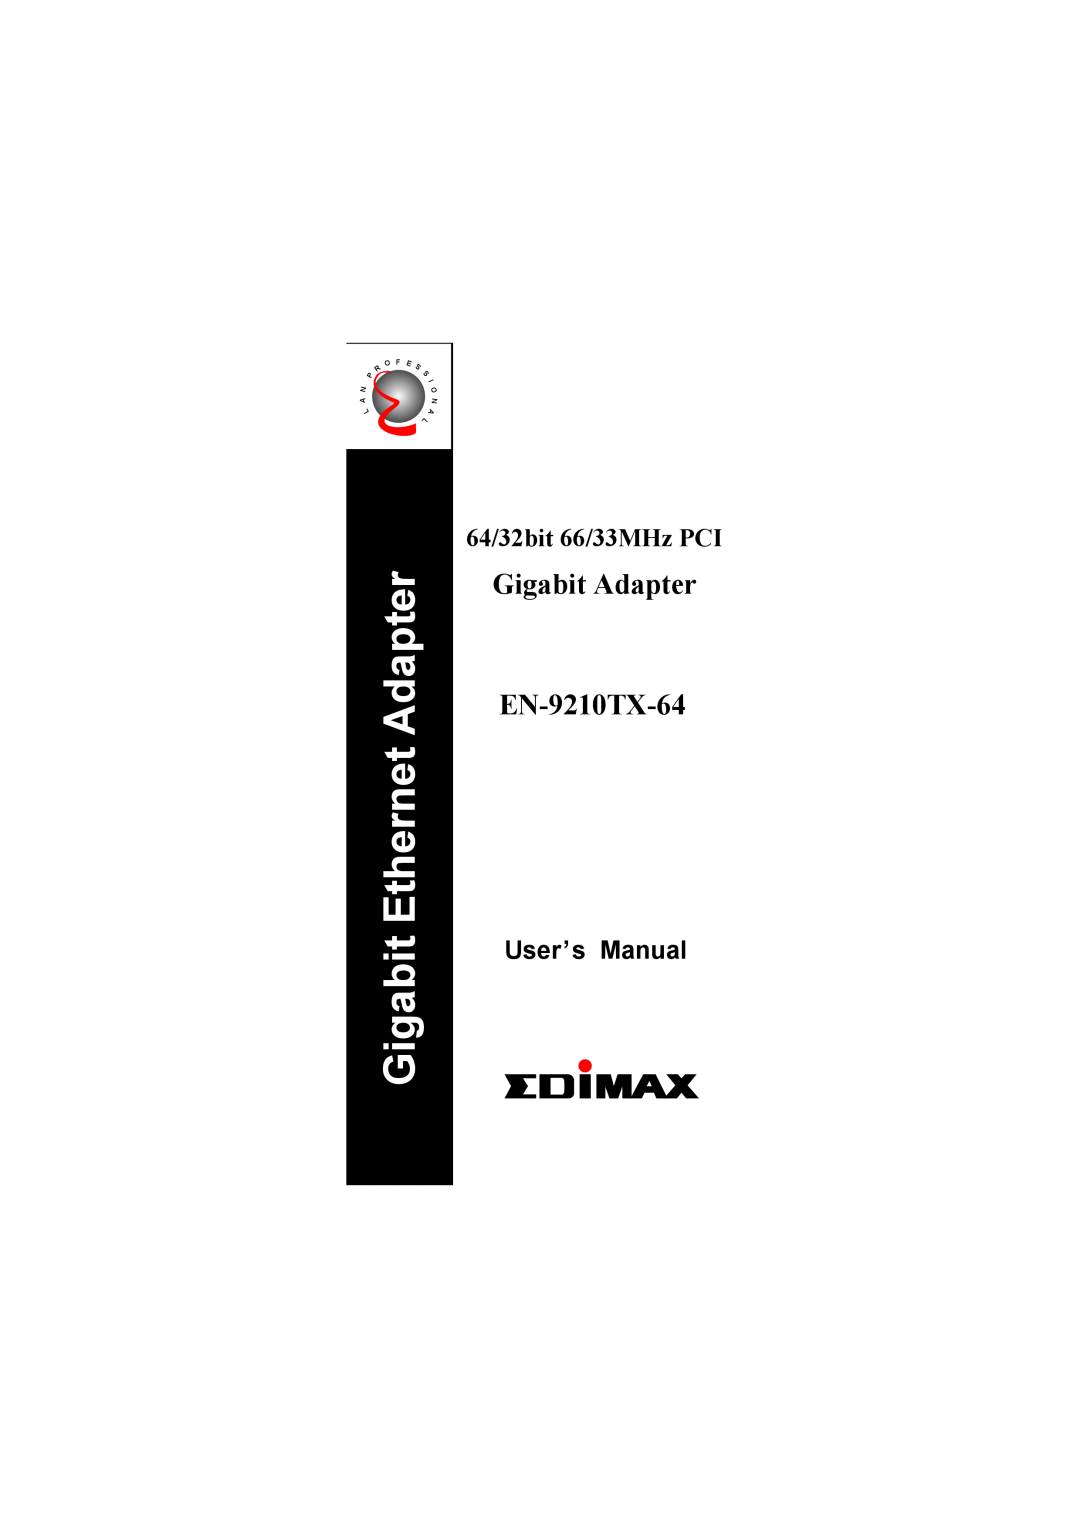 Edimax Technology user manual Gigabit Ethernet Adapter, Gigabit Adapter EN-9210TX-64, 64/32bit 66/33MHz PCI 